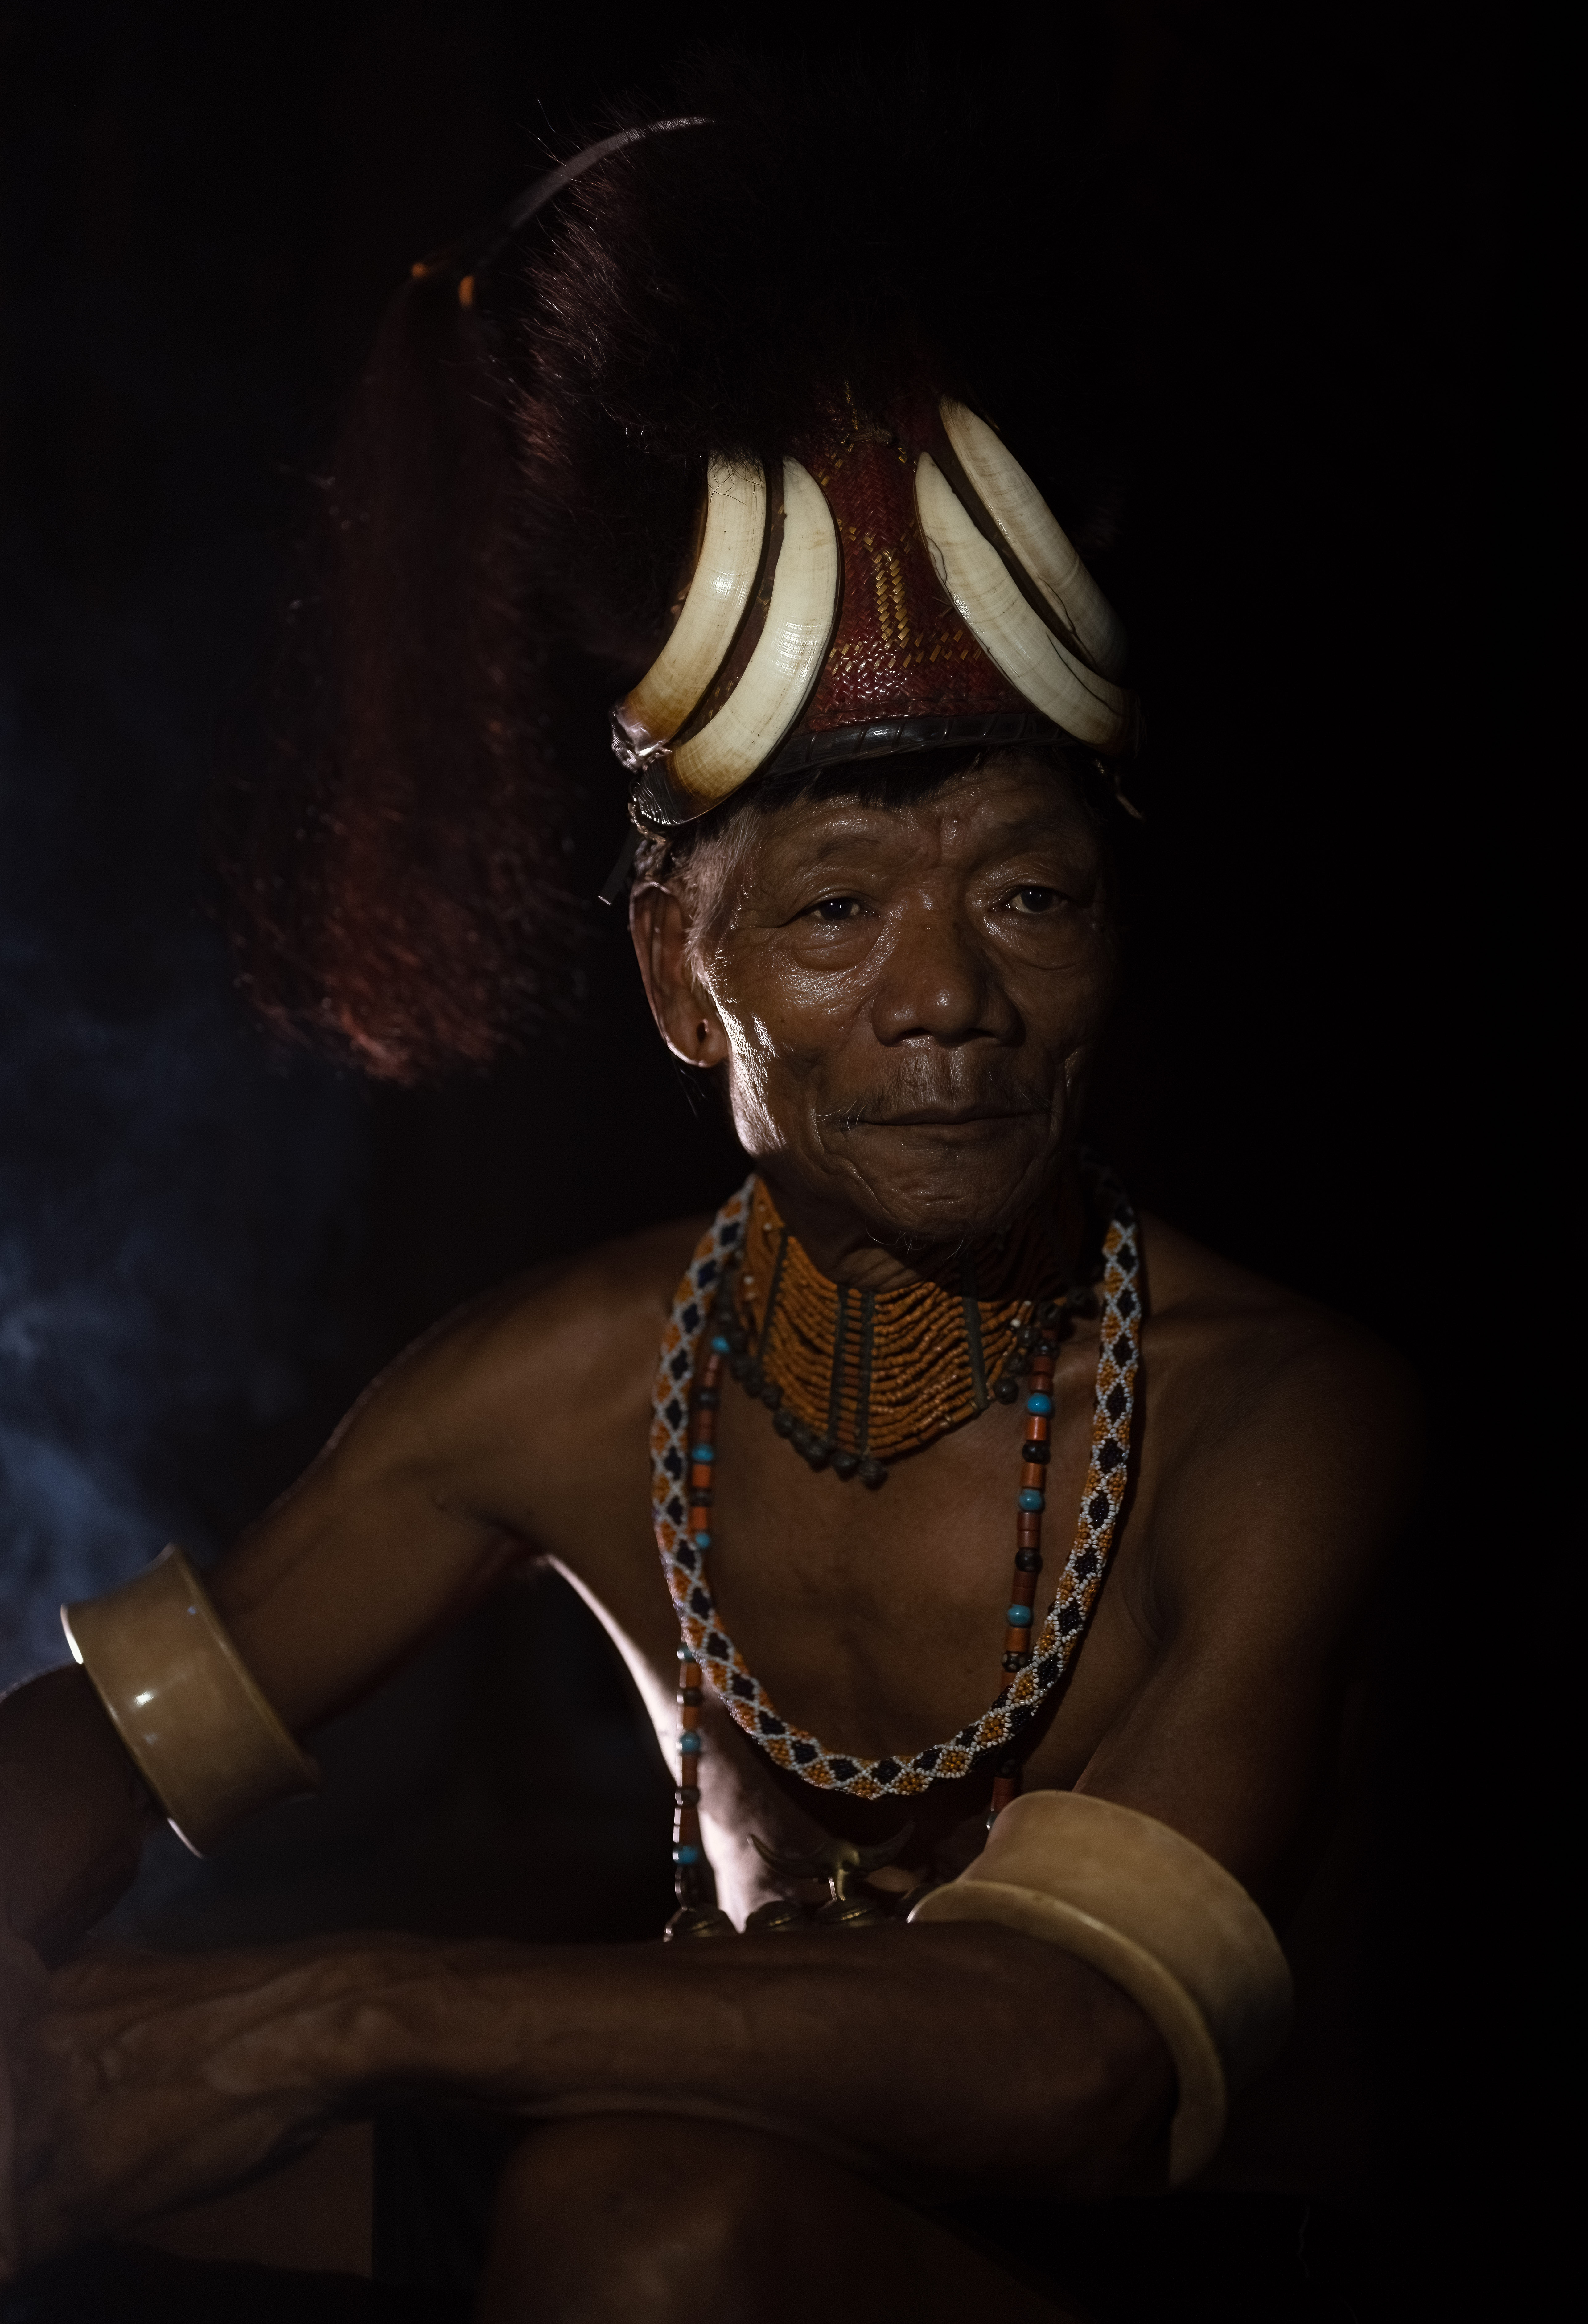 Nagaland - Photographing India's Last Headhunters